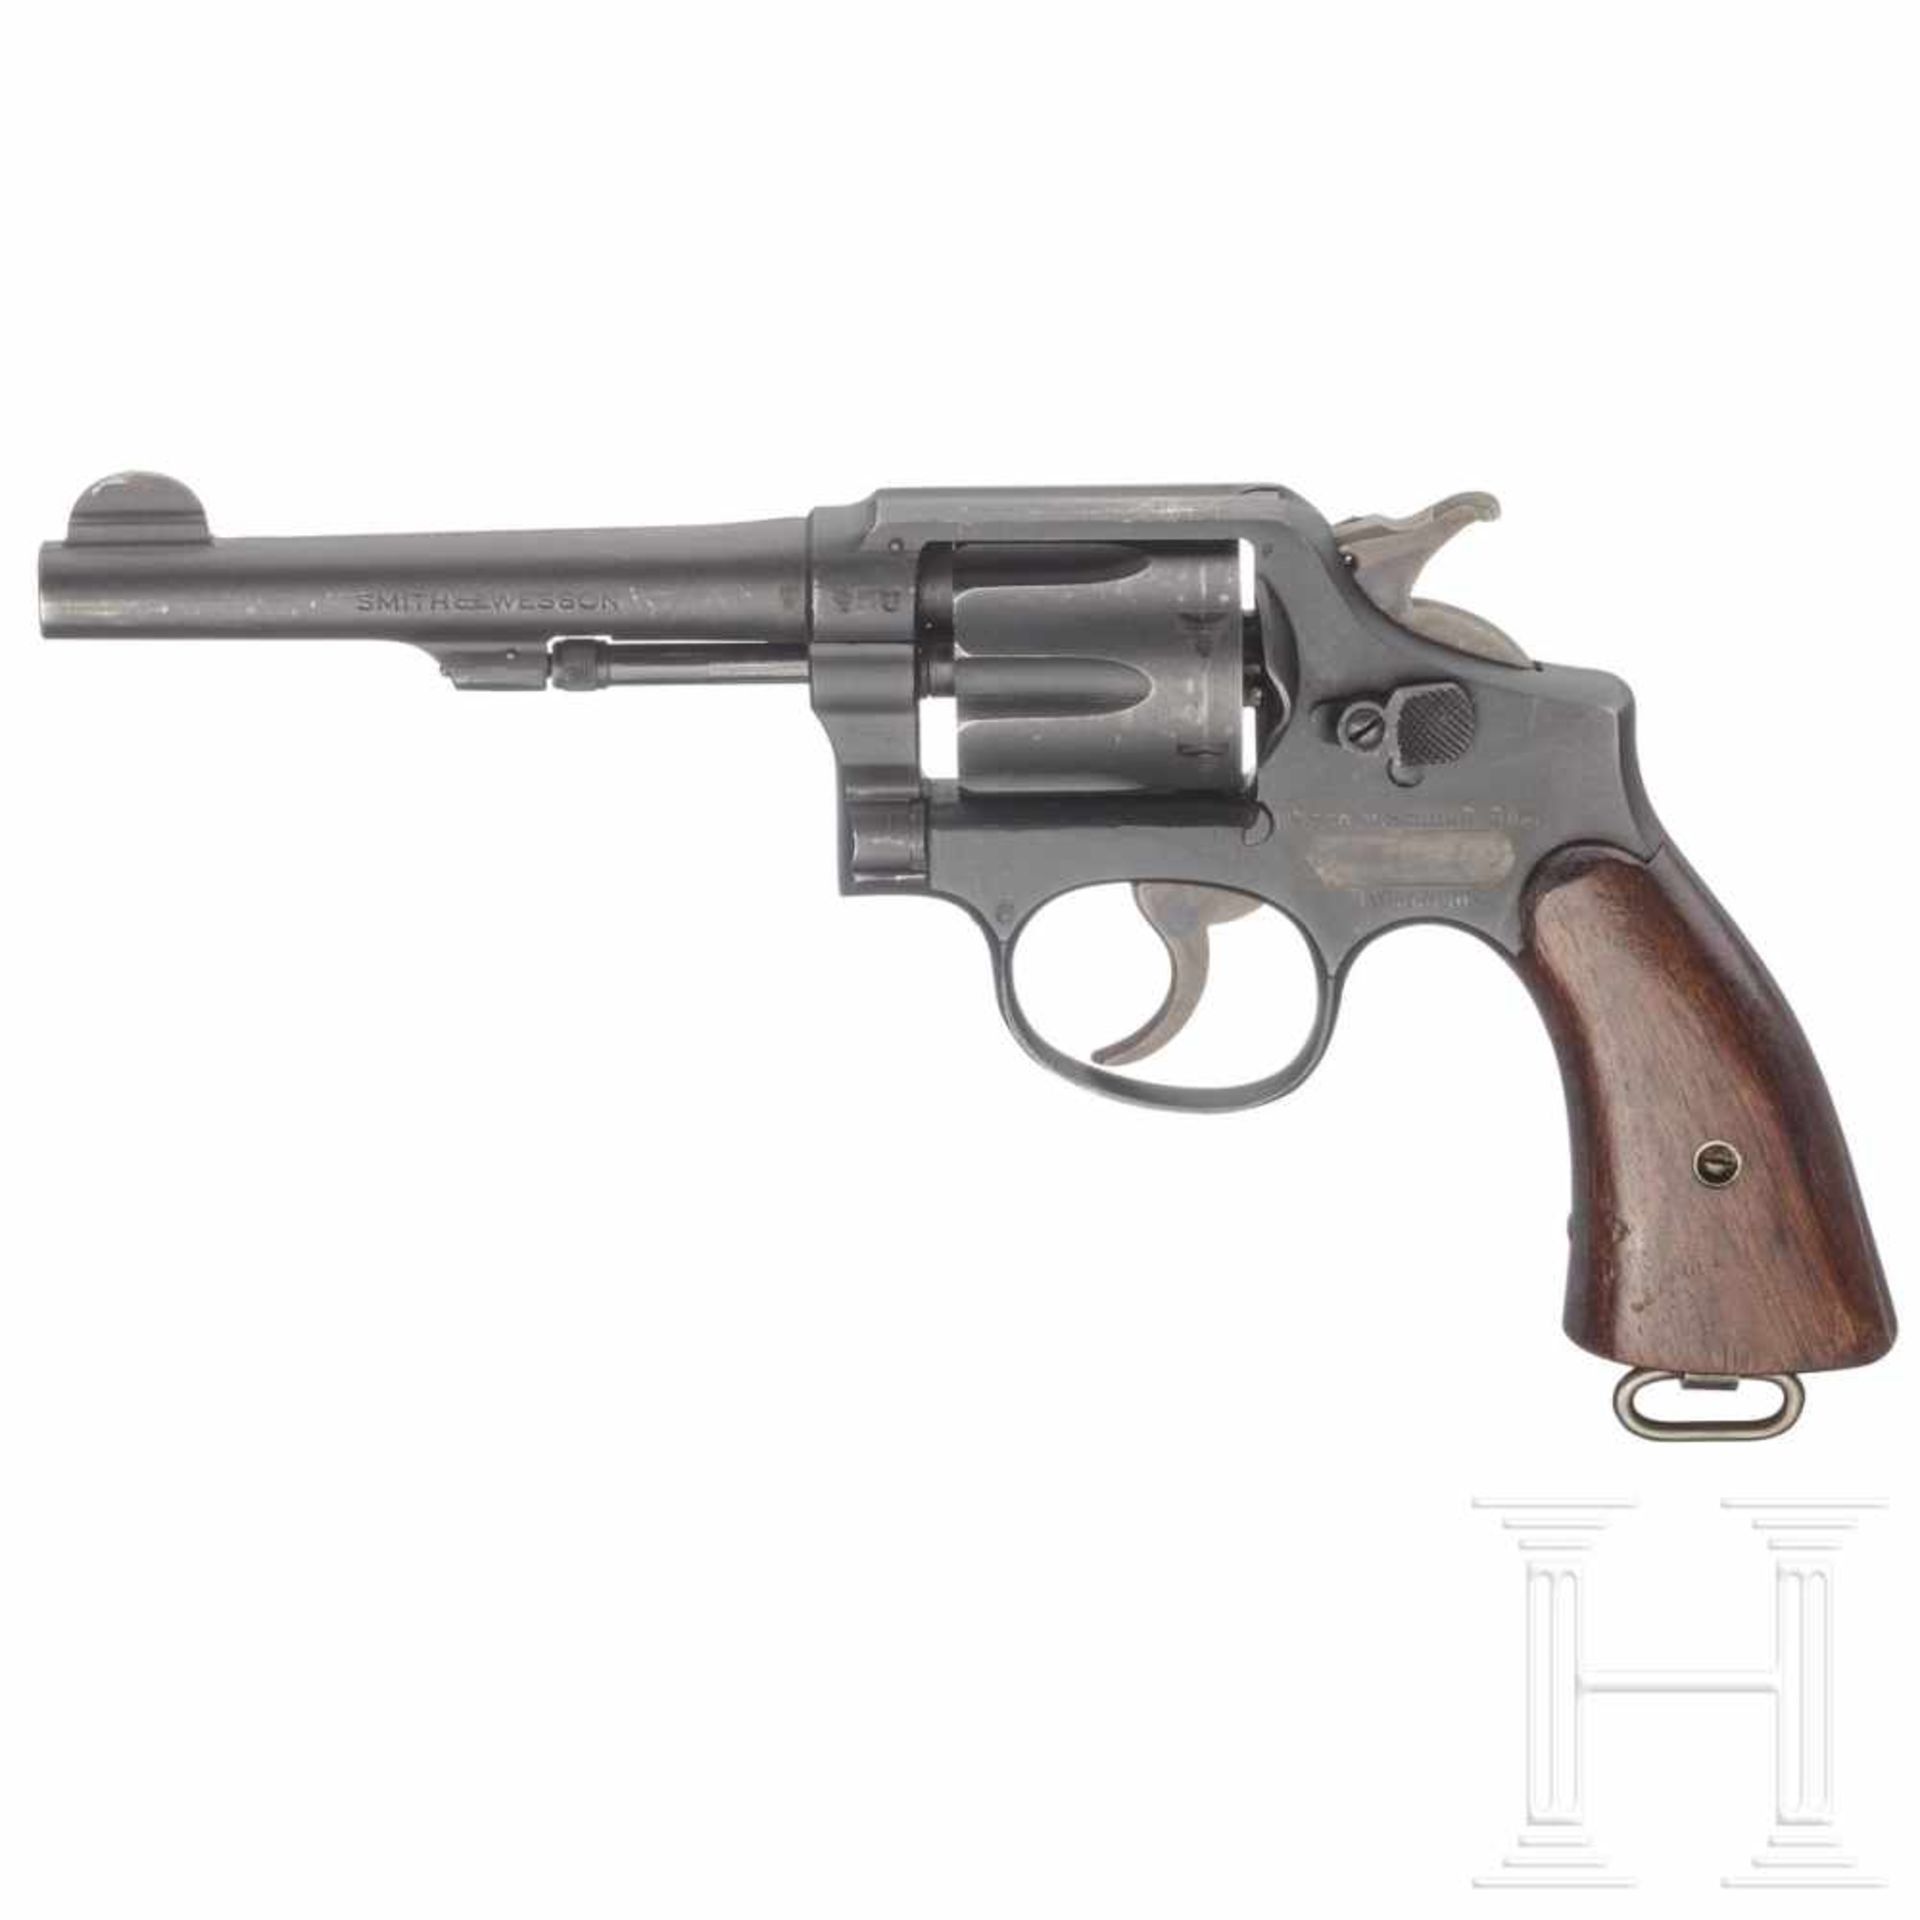 Smith & Wesson M & P, Victory-ModellKal. .38 S&W, Nr. V 671131, nummerngleich. Blanker Lauf, Länge